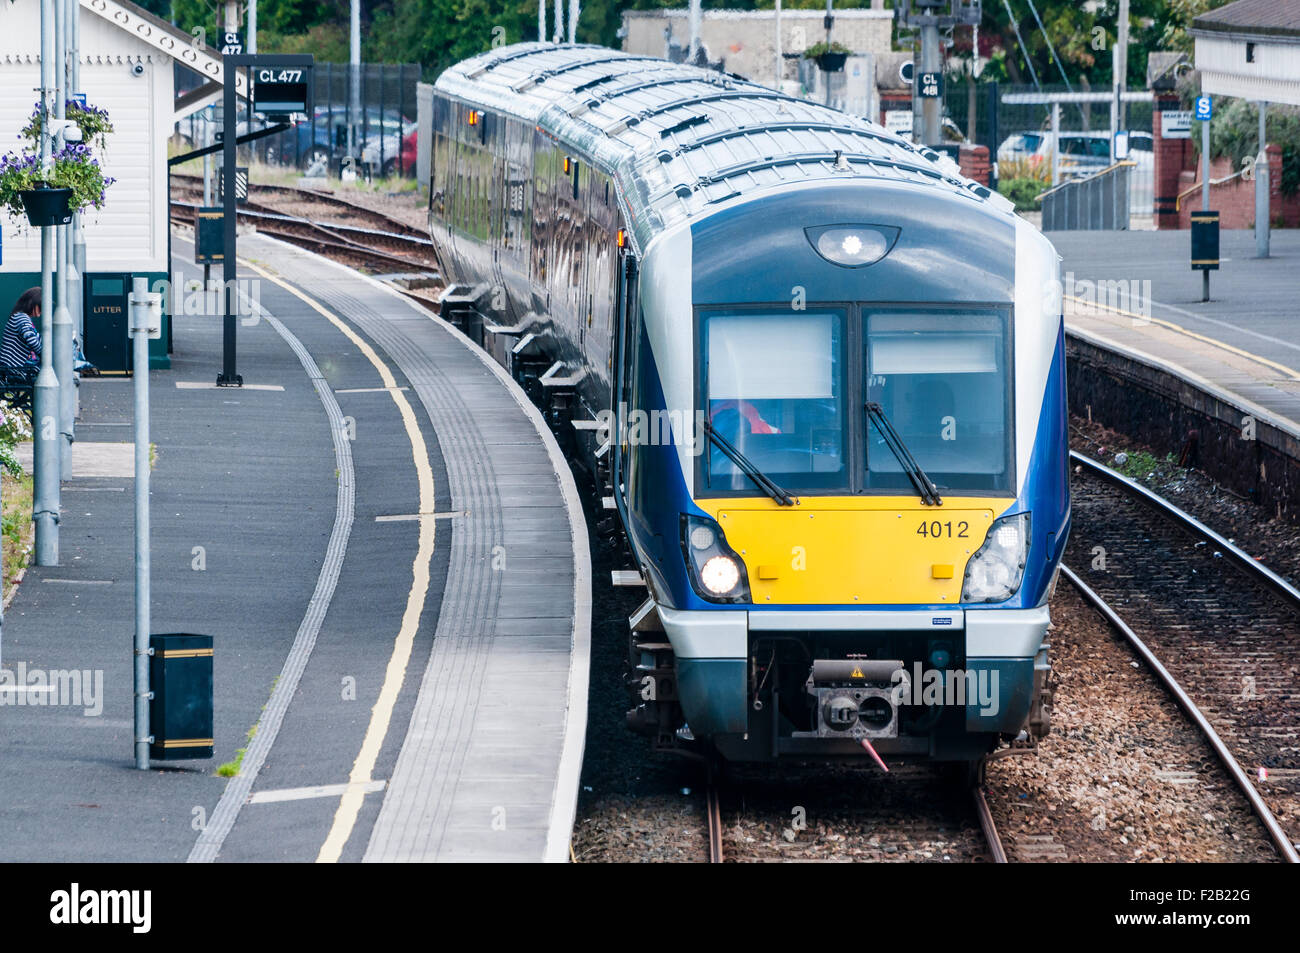 A Northern Ireland Railways train waits at a platform. Stock Photo